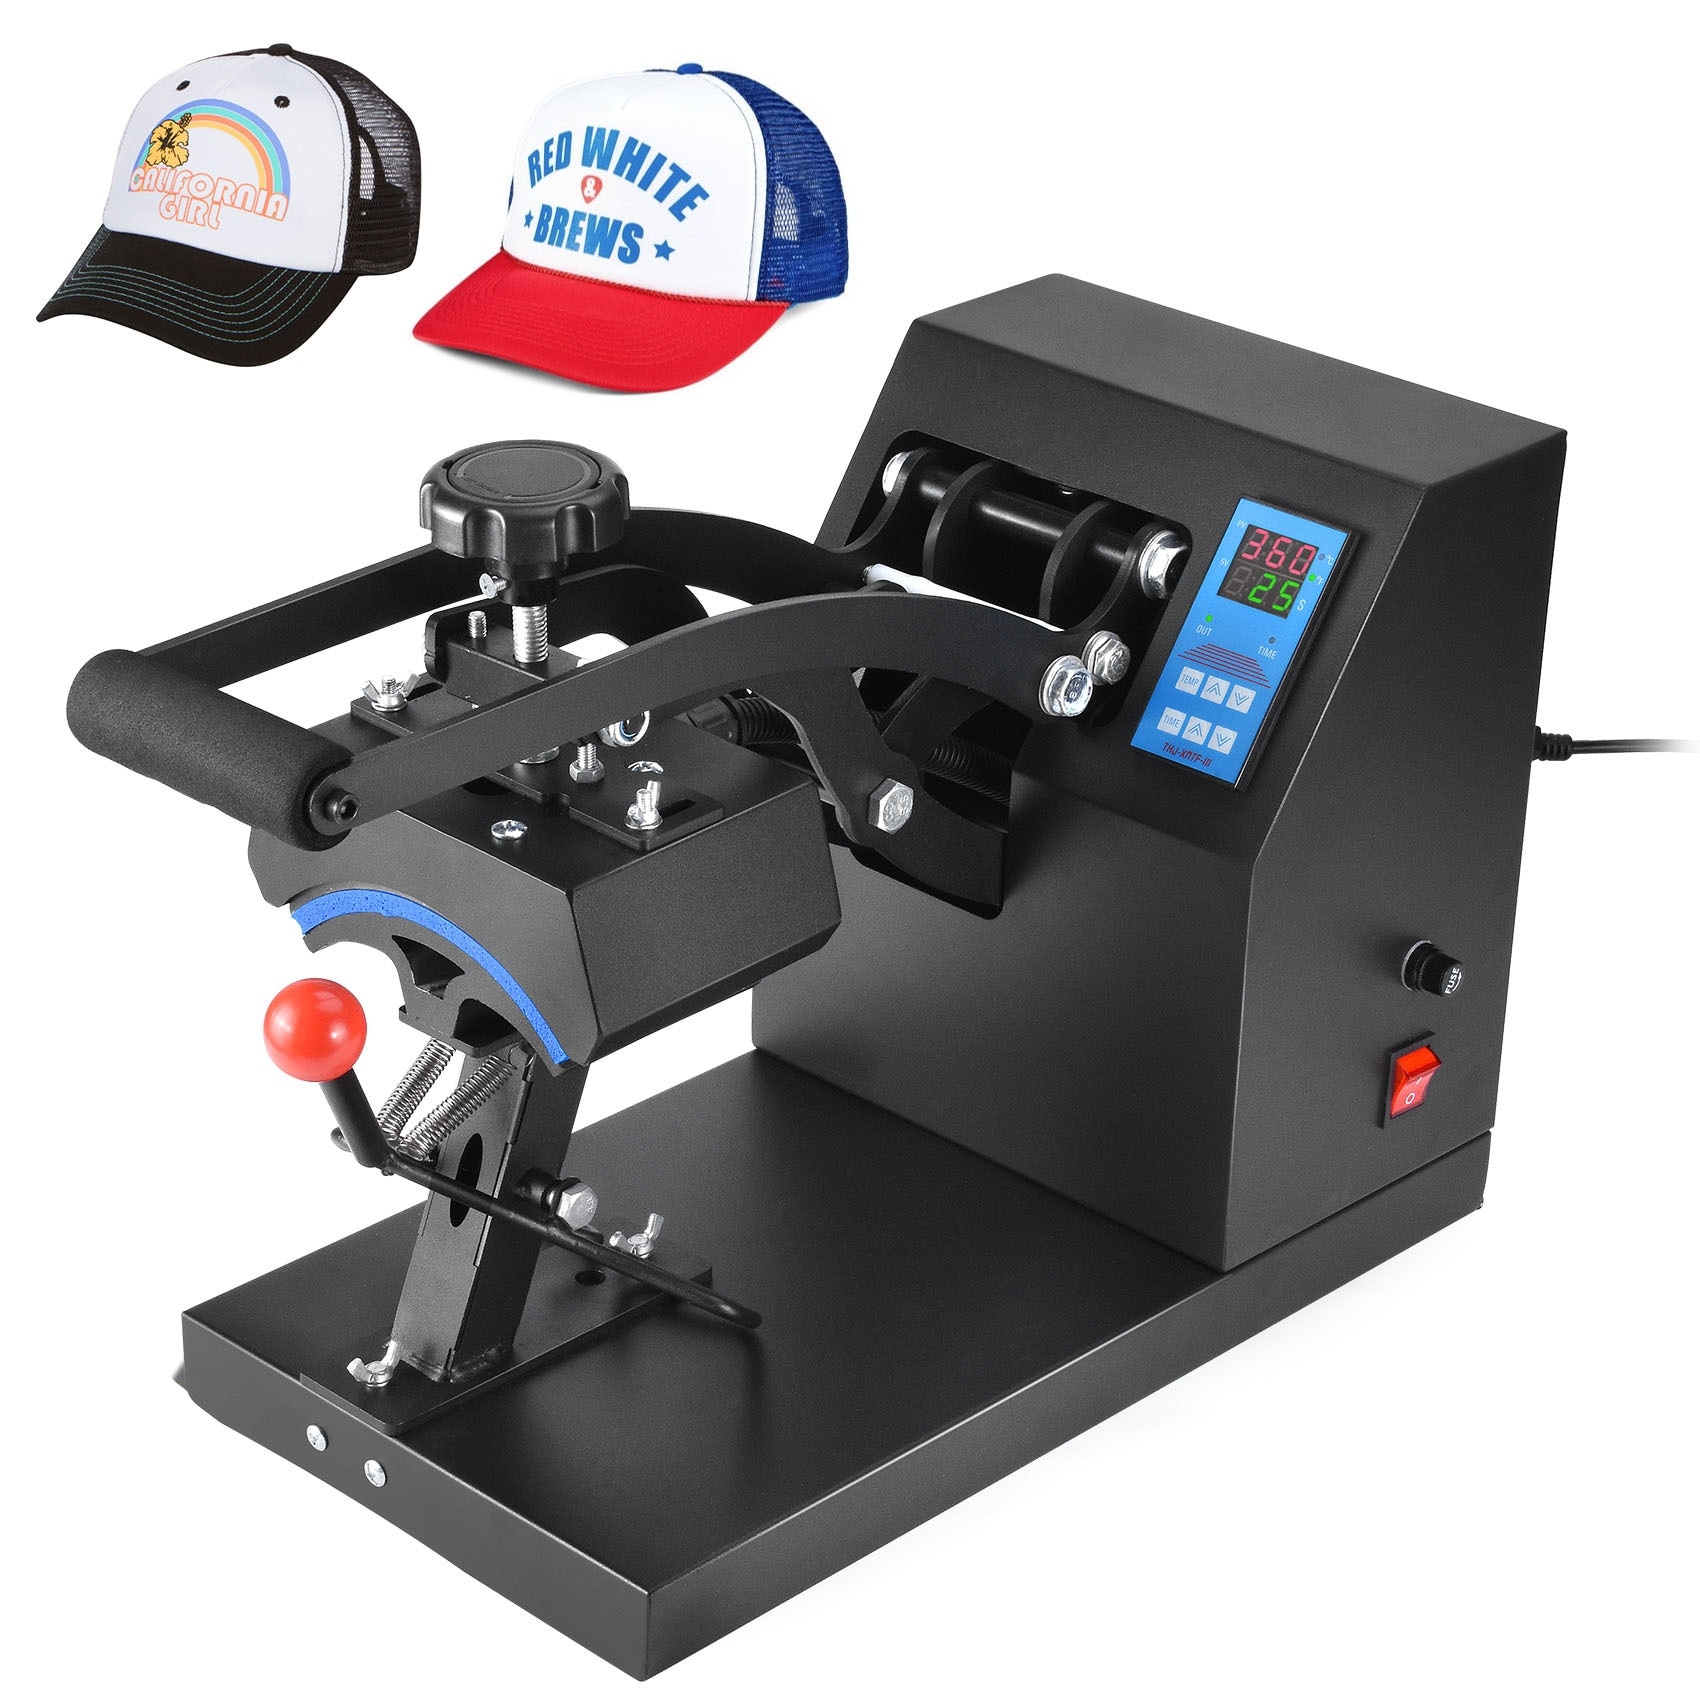 Black Hat Press Digital Baseball Cap Heat Press Machine 6x3.5 inch Clamshell Design